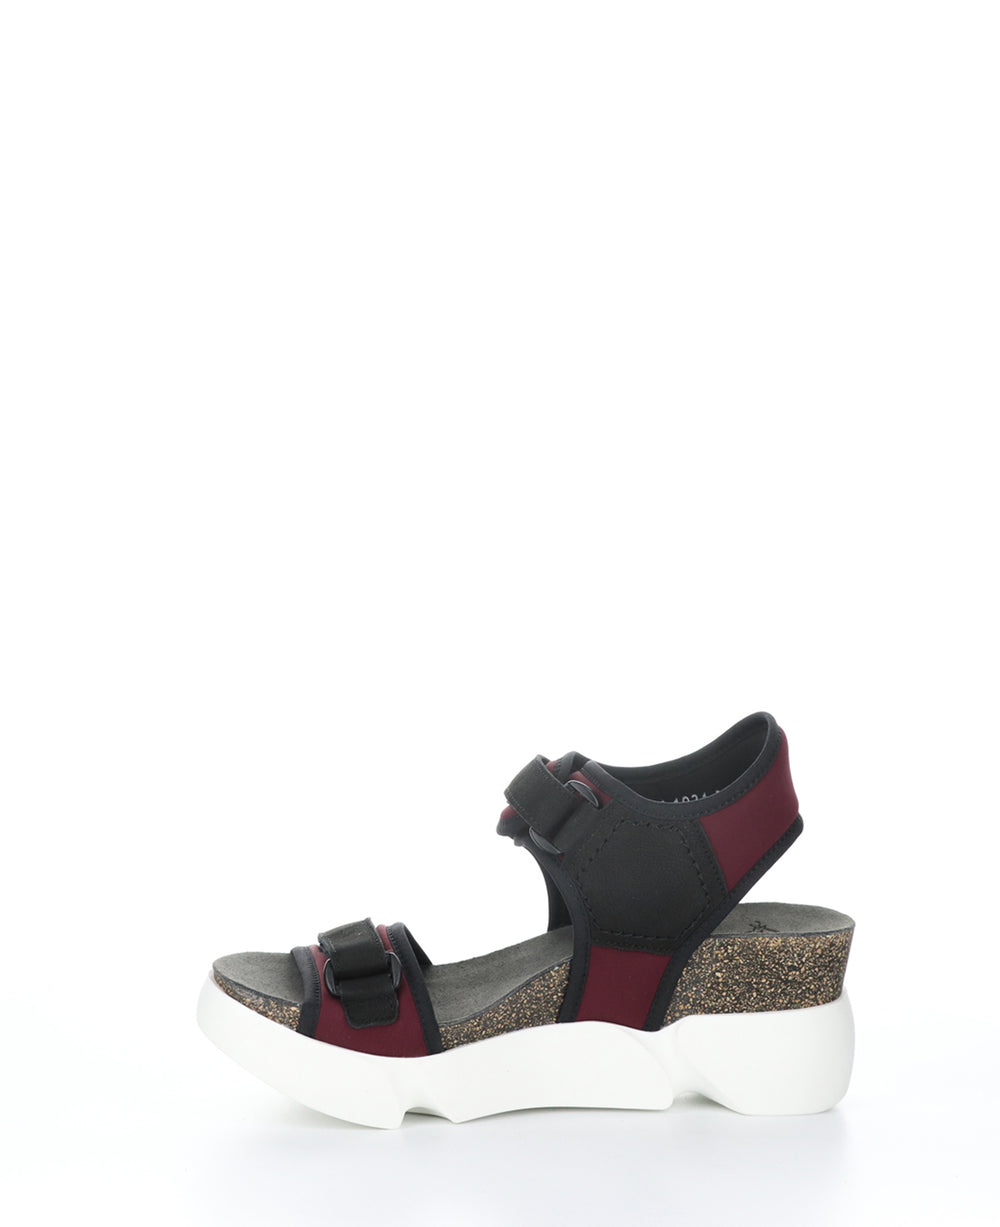 SIGO727FLY BORDEAUX/BLACK Wedge Sandals|SIGO727FLY Chaussures à Bout Rond in Violet